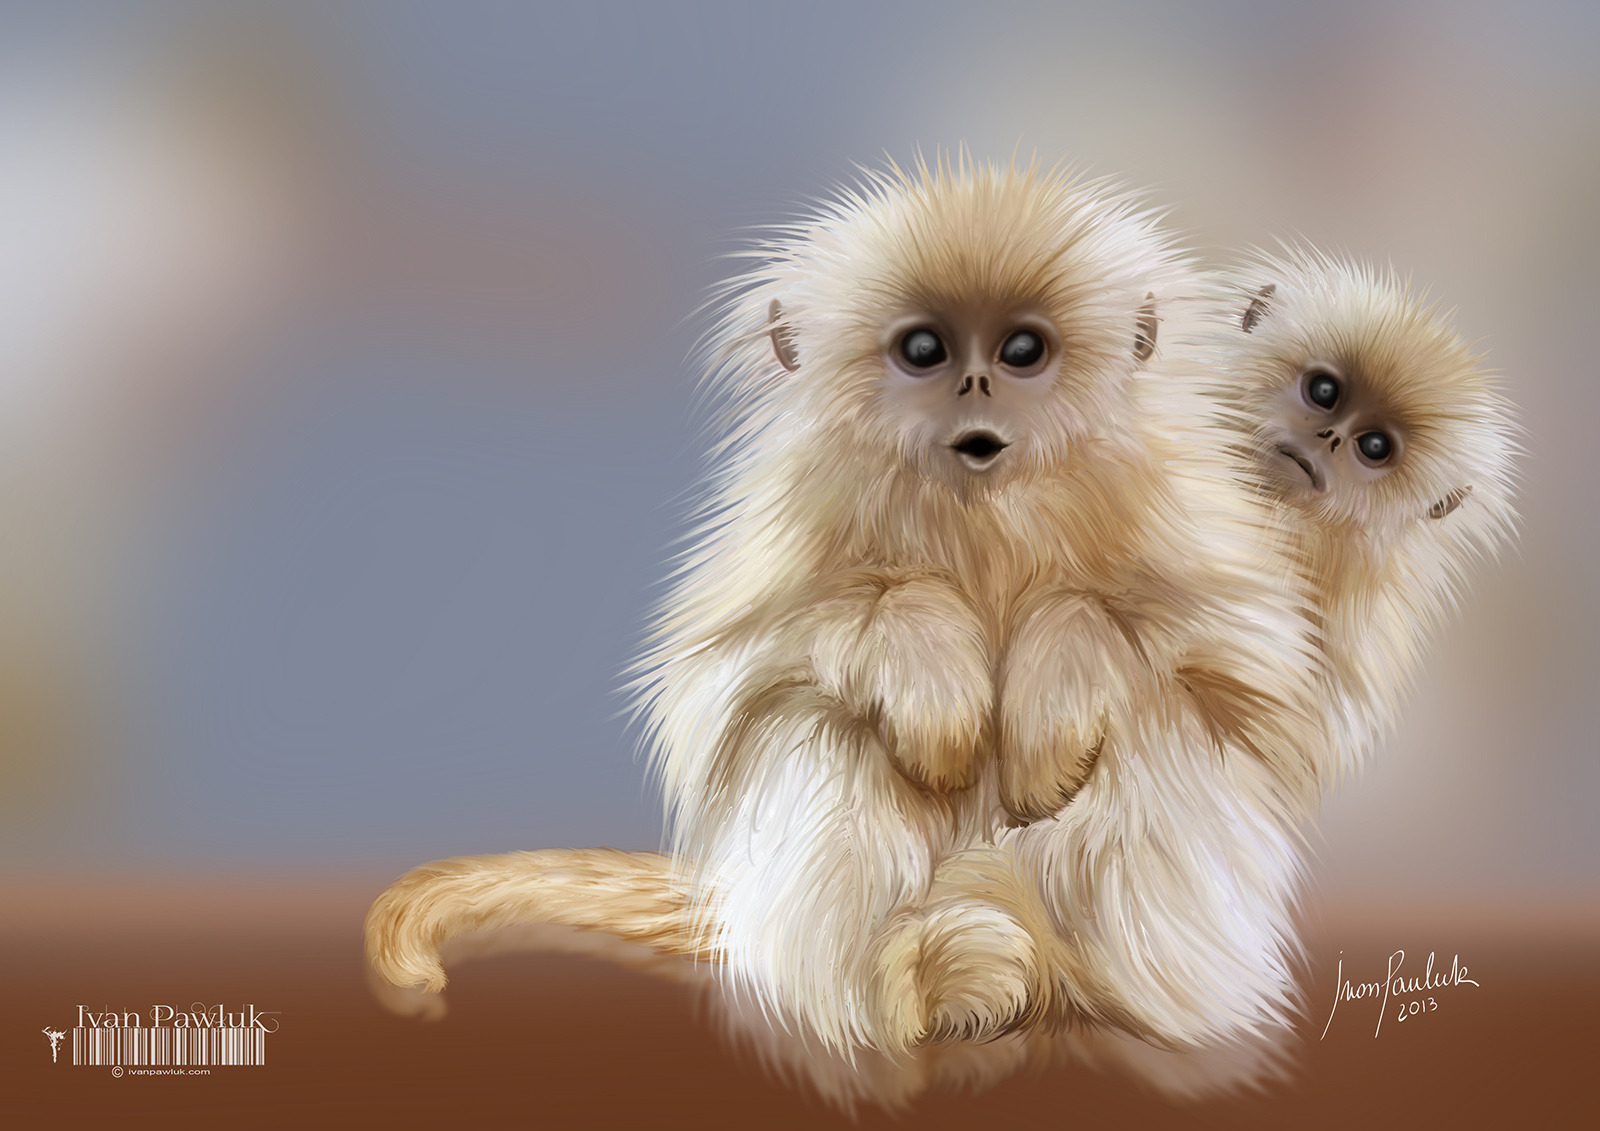 Golden snub-nosed monkey Art by Ivan Pawluk